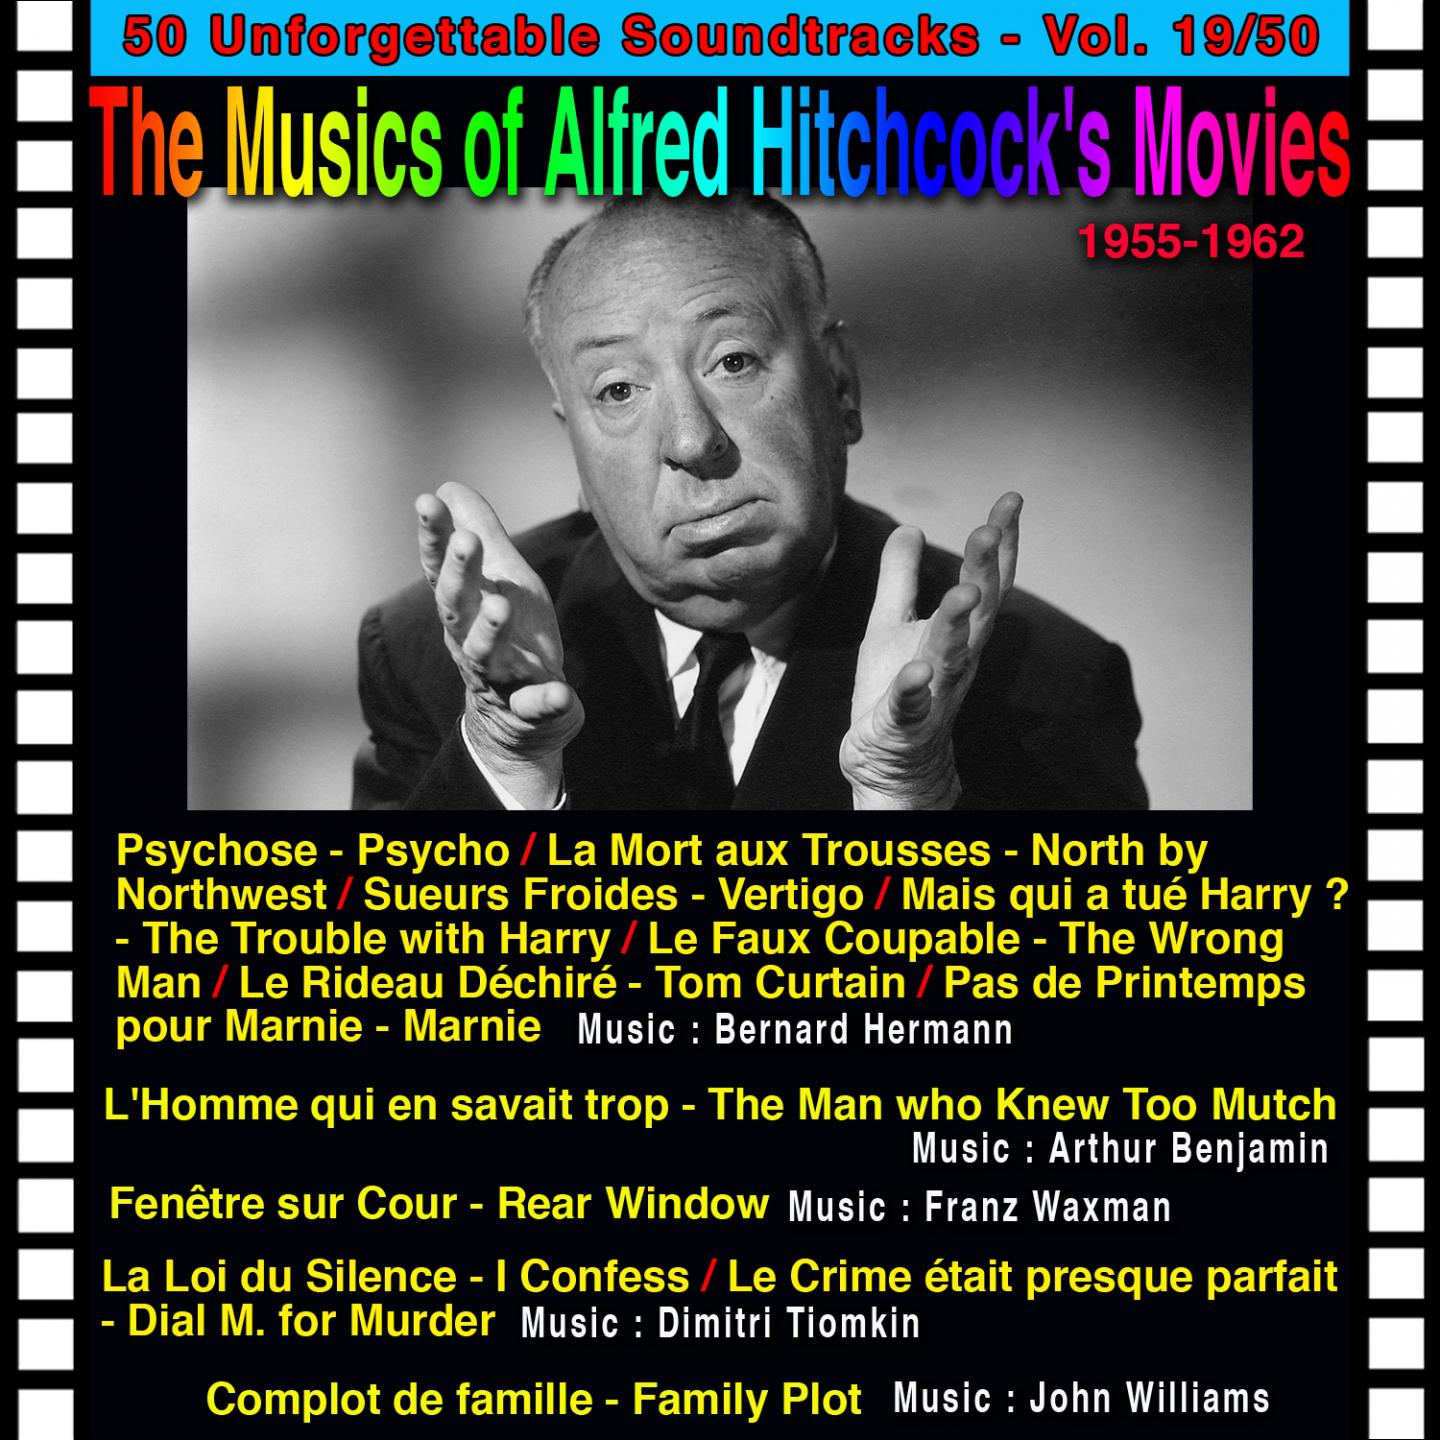 La Loi Du Silence / I Confess: Theme (Alfred Hitchcock (1955-1962))